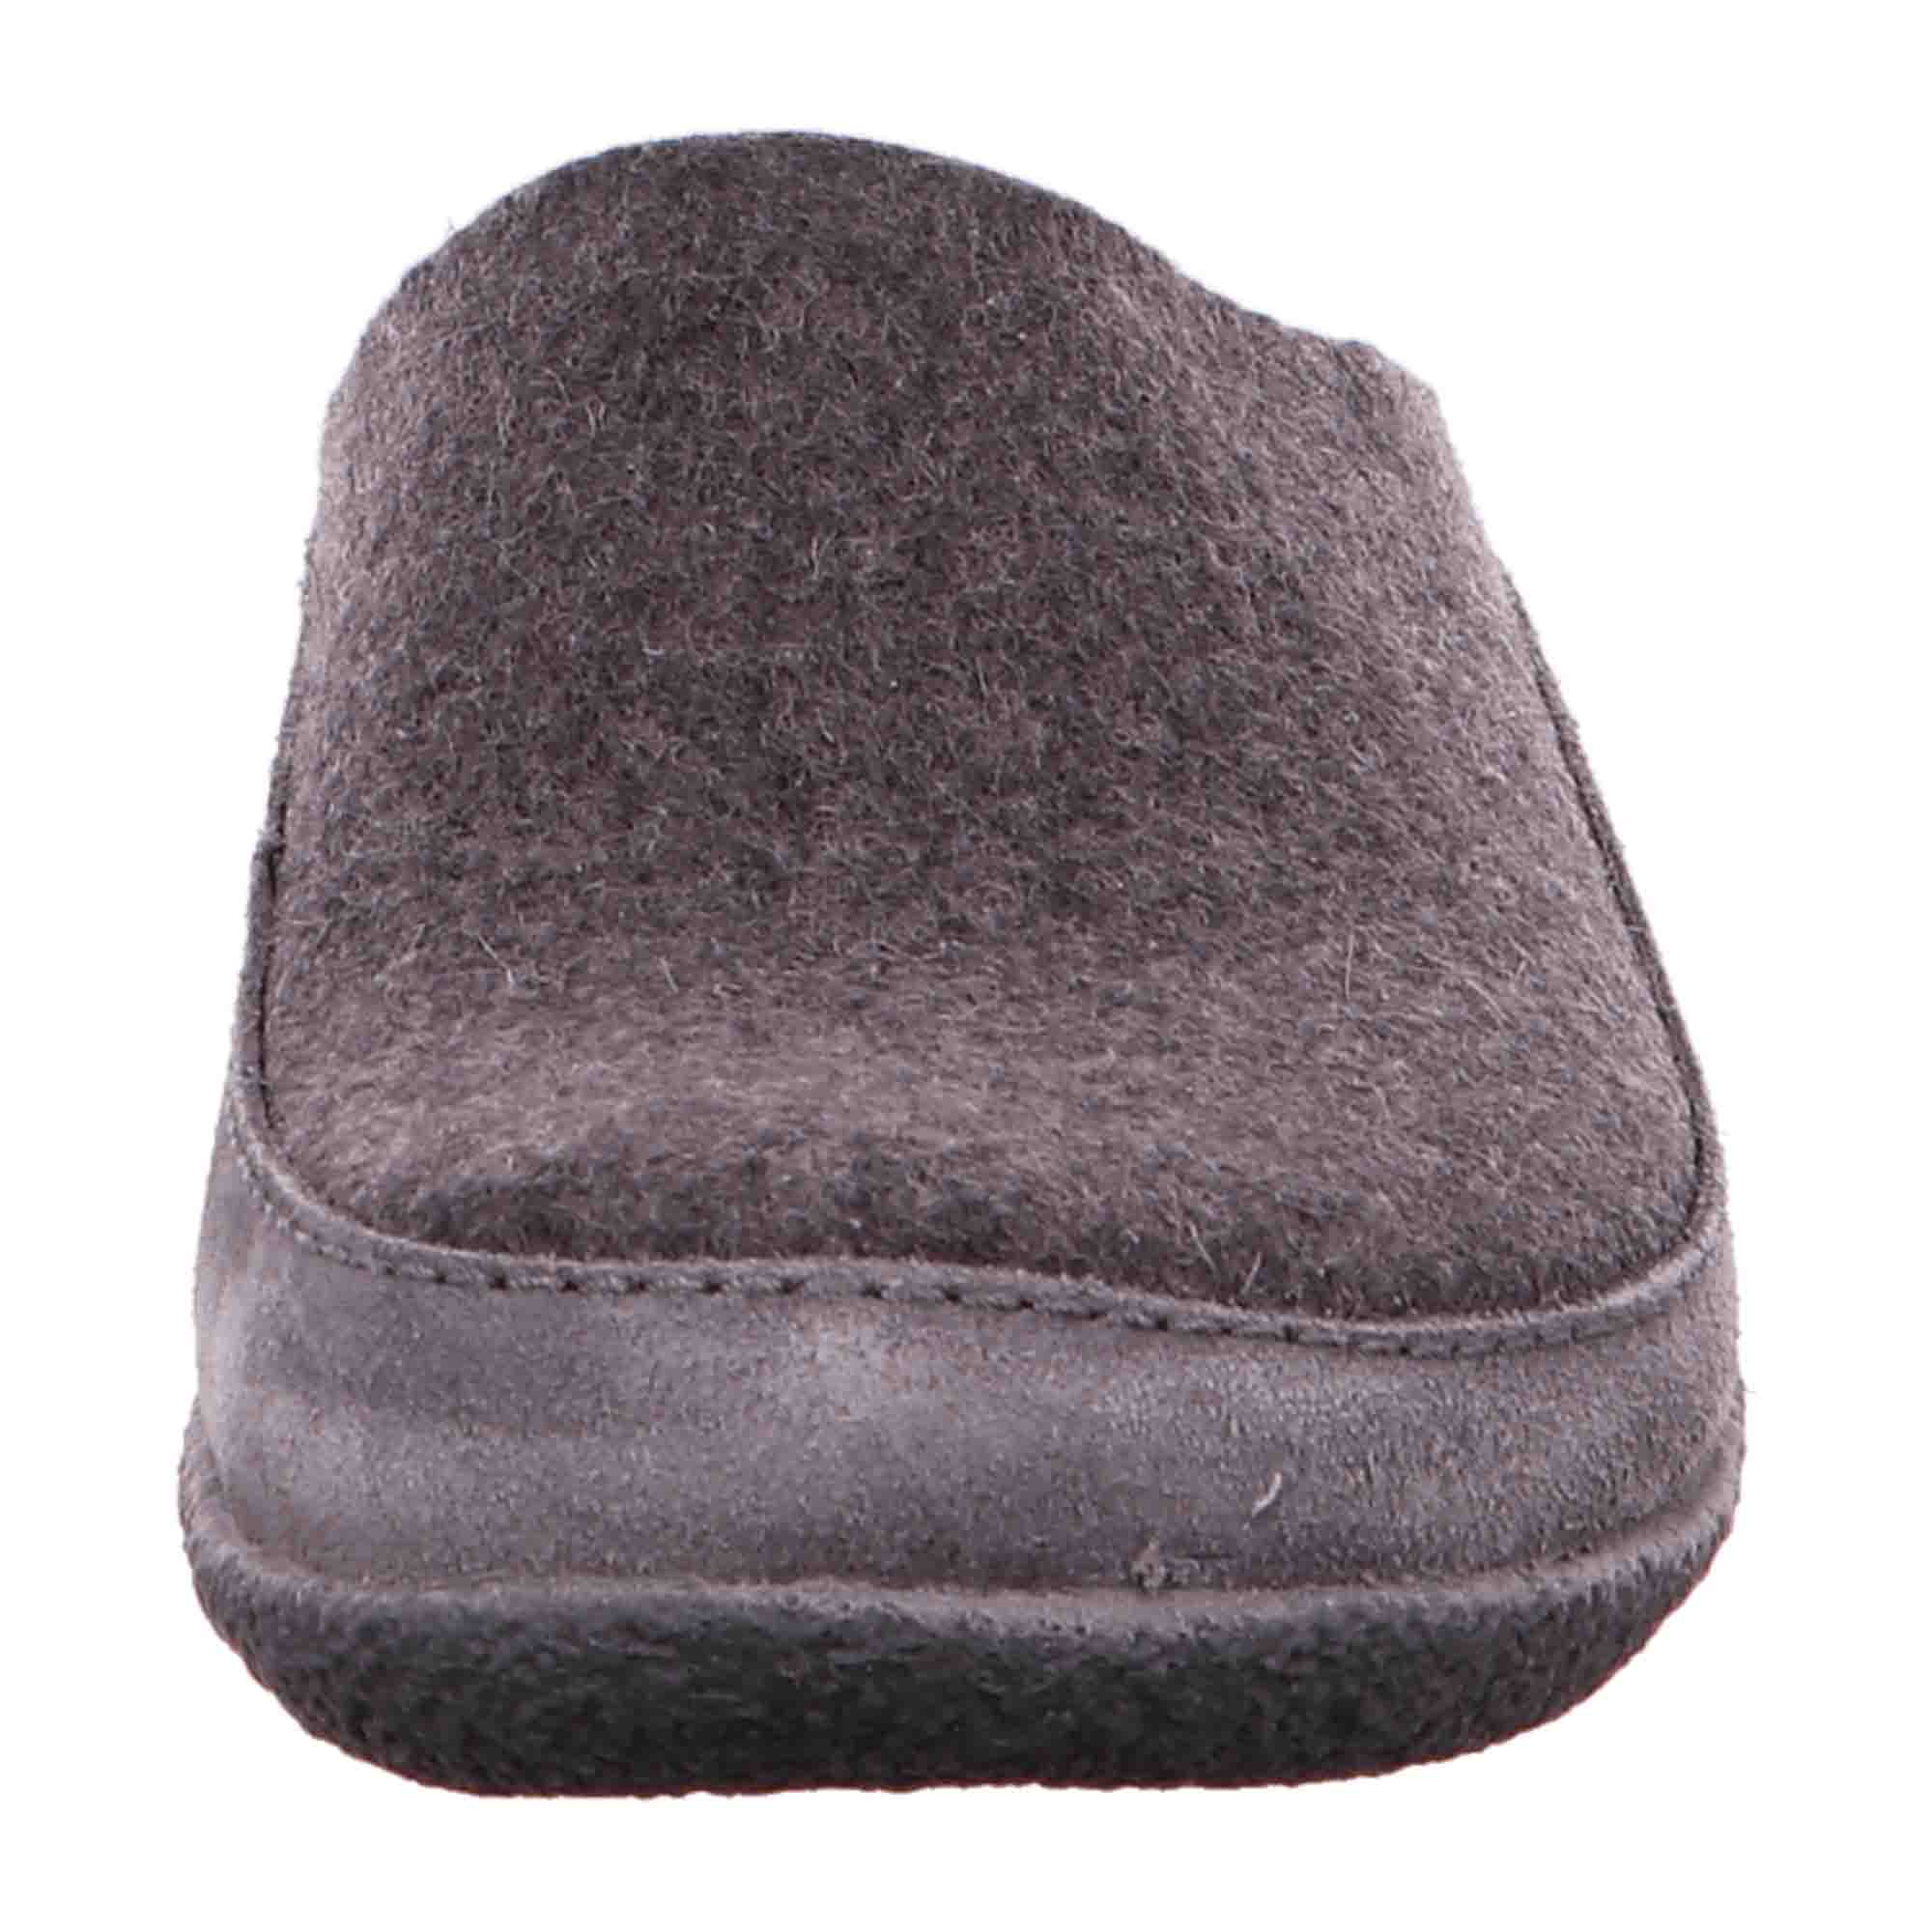 Haflinger Blizzard Graphite Men's Slippers, Grey - Comfortable & Durable